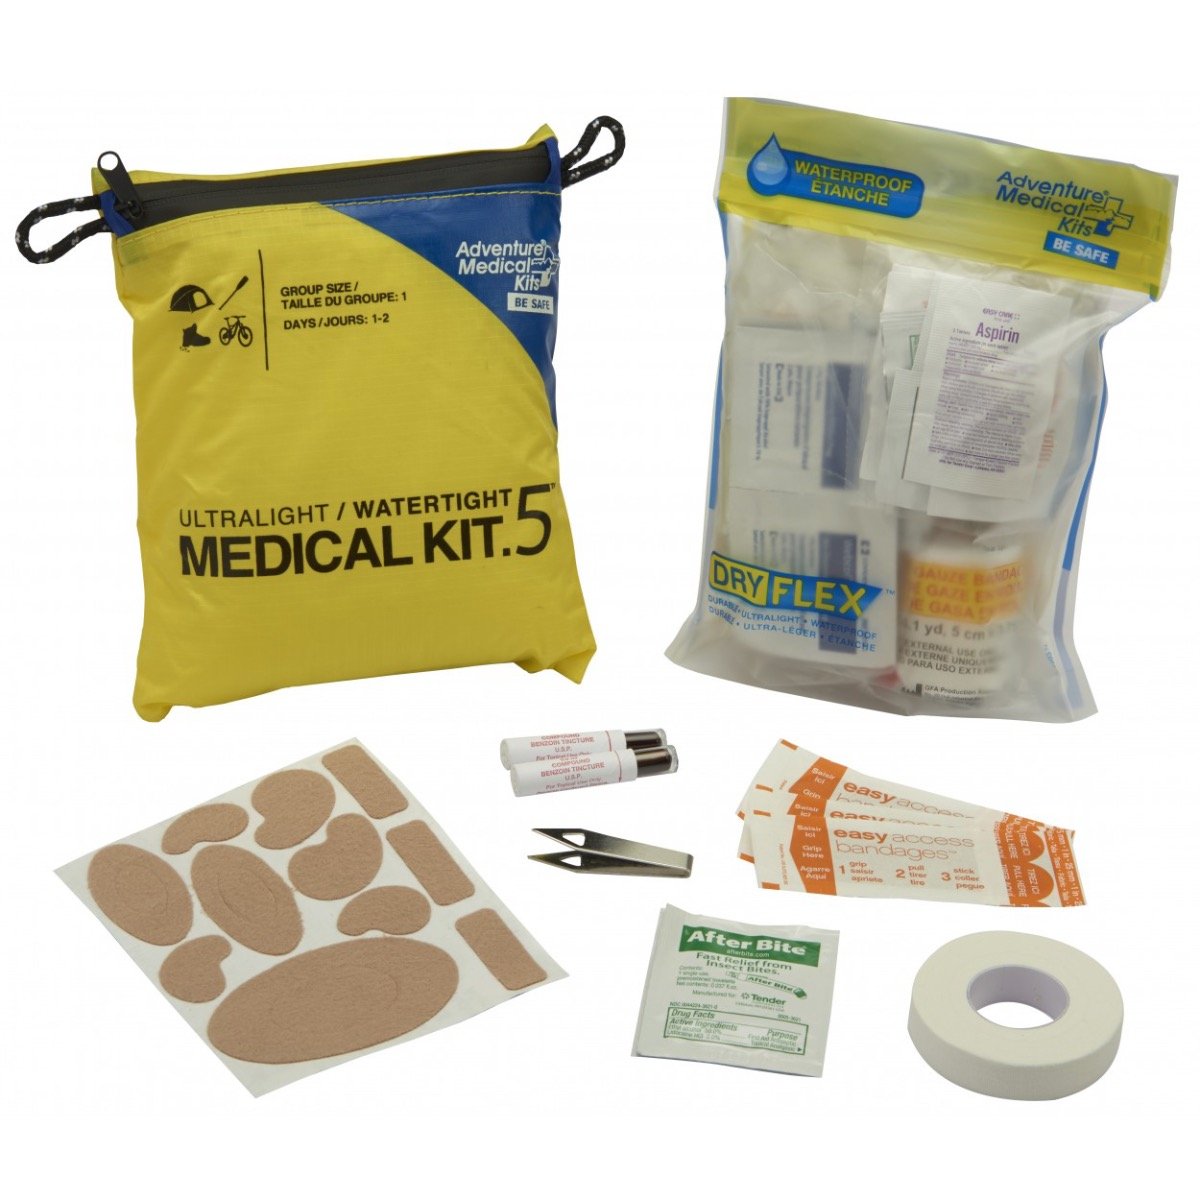 Adventure Medical - First Aid Kit - Ultralight/Watertight .5 - 0125-0292